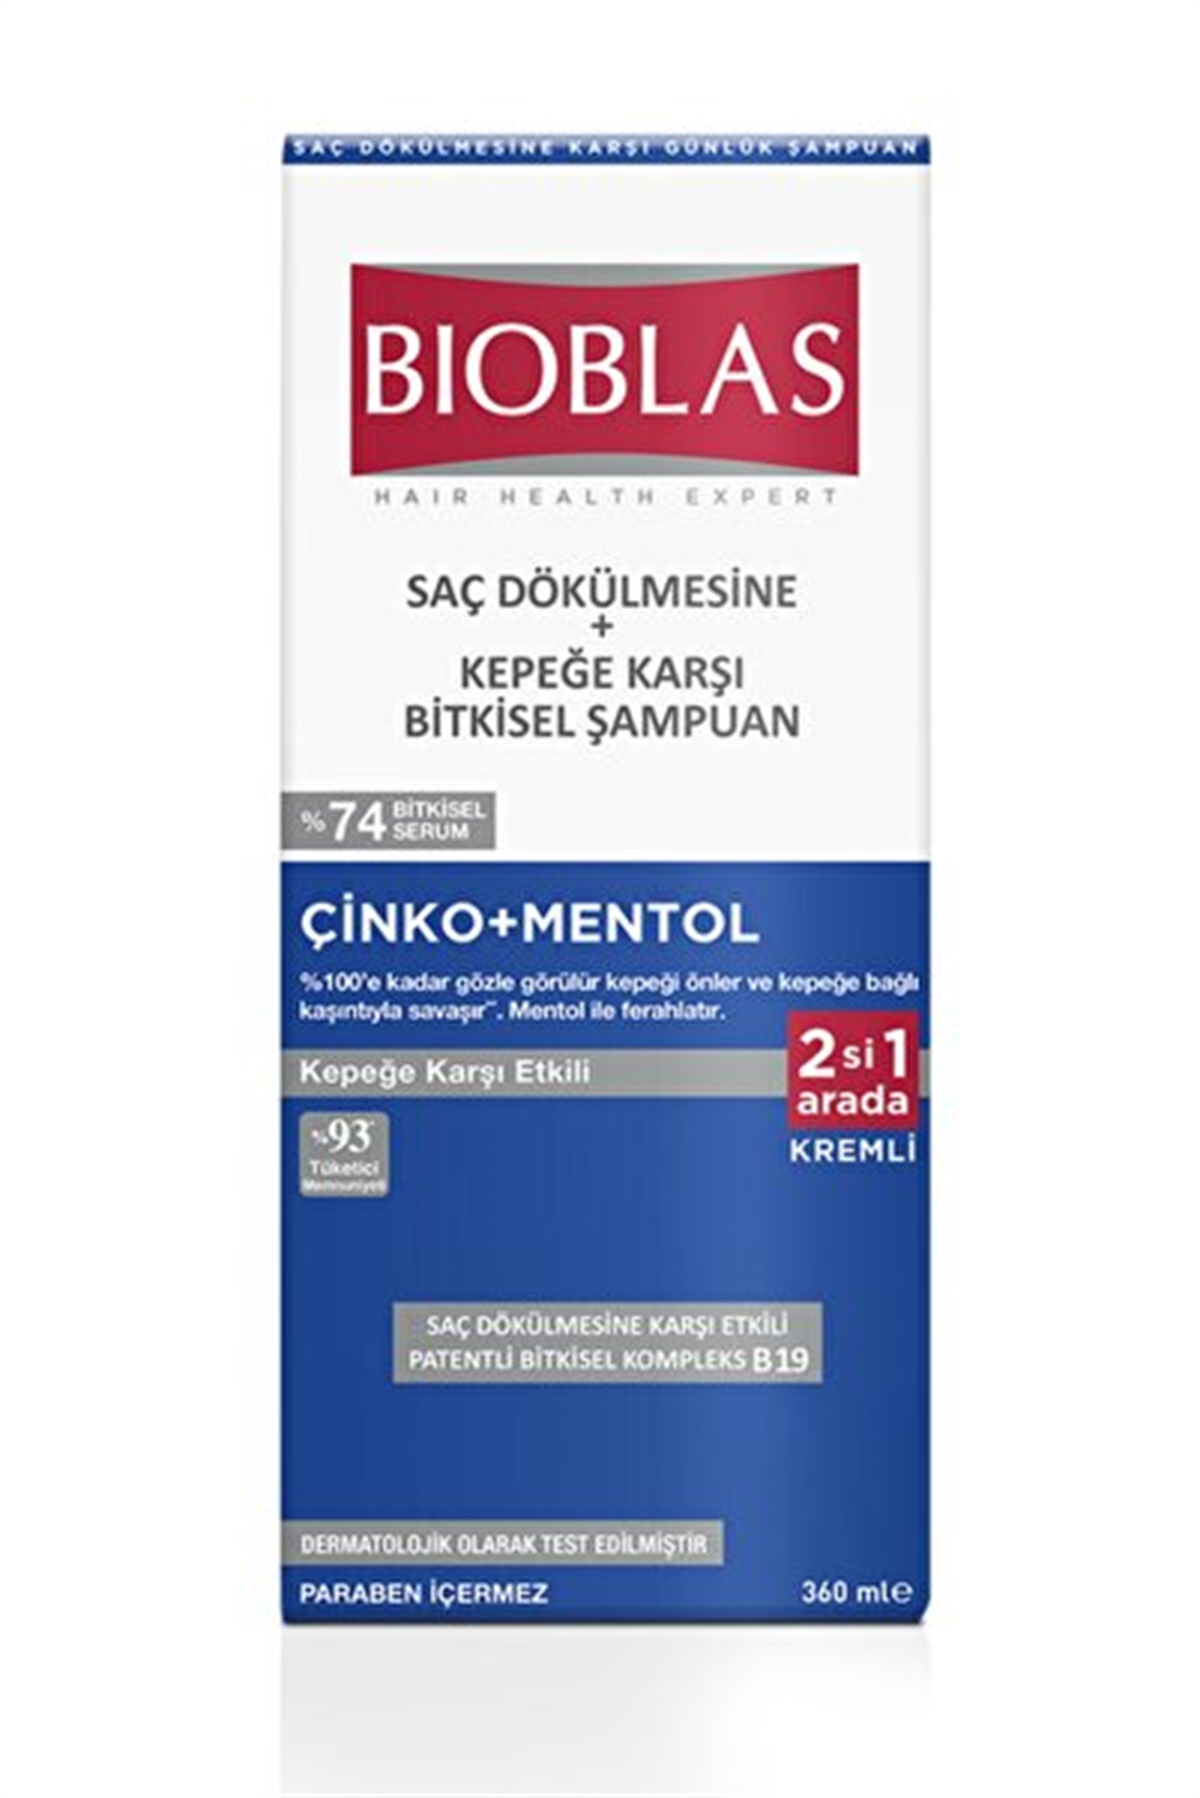 Bioblas Çinko + Mentol Kepeğe Karşı 2si 1 Arada Şampuan 360 ml